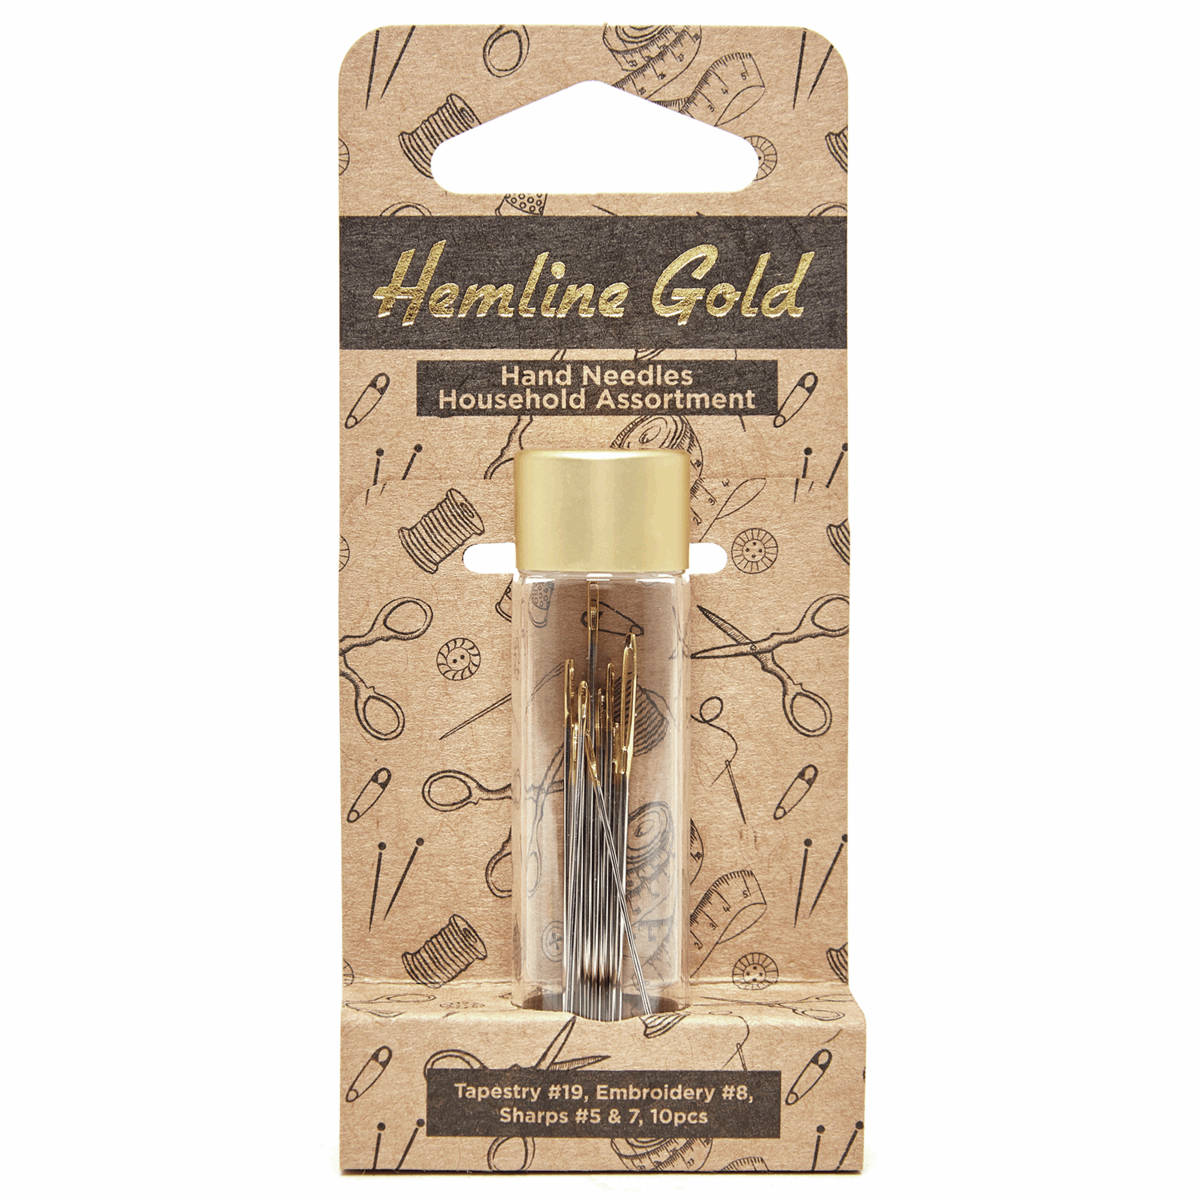 Hemline Gold Hand Sewing Needles - Premium - Household Needles - Assorted Sizes